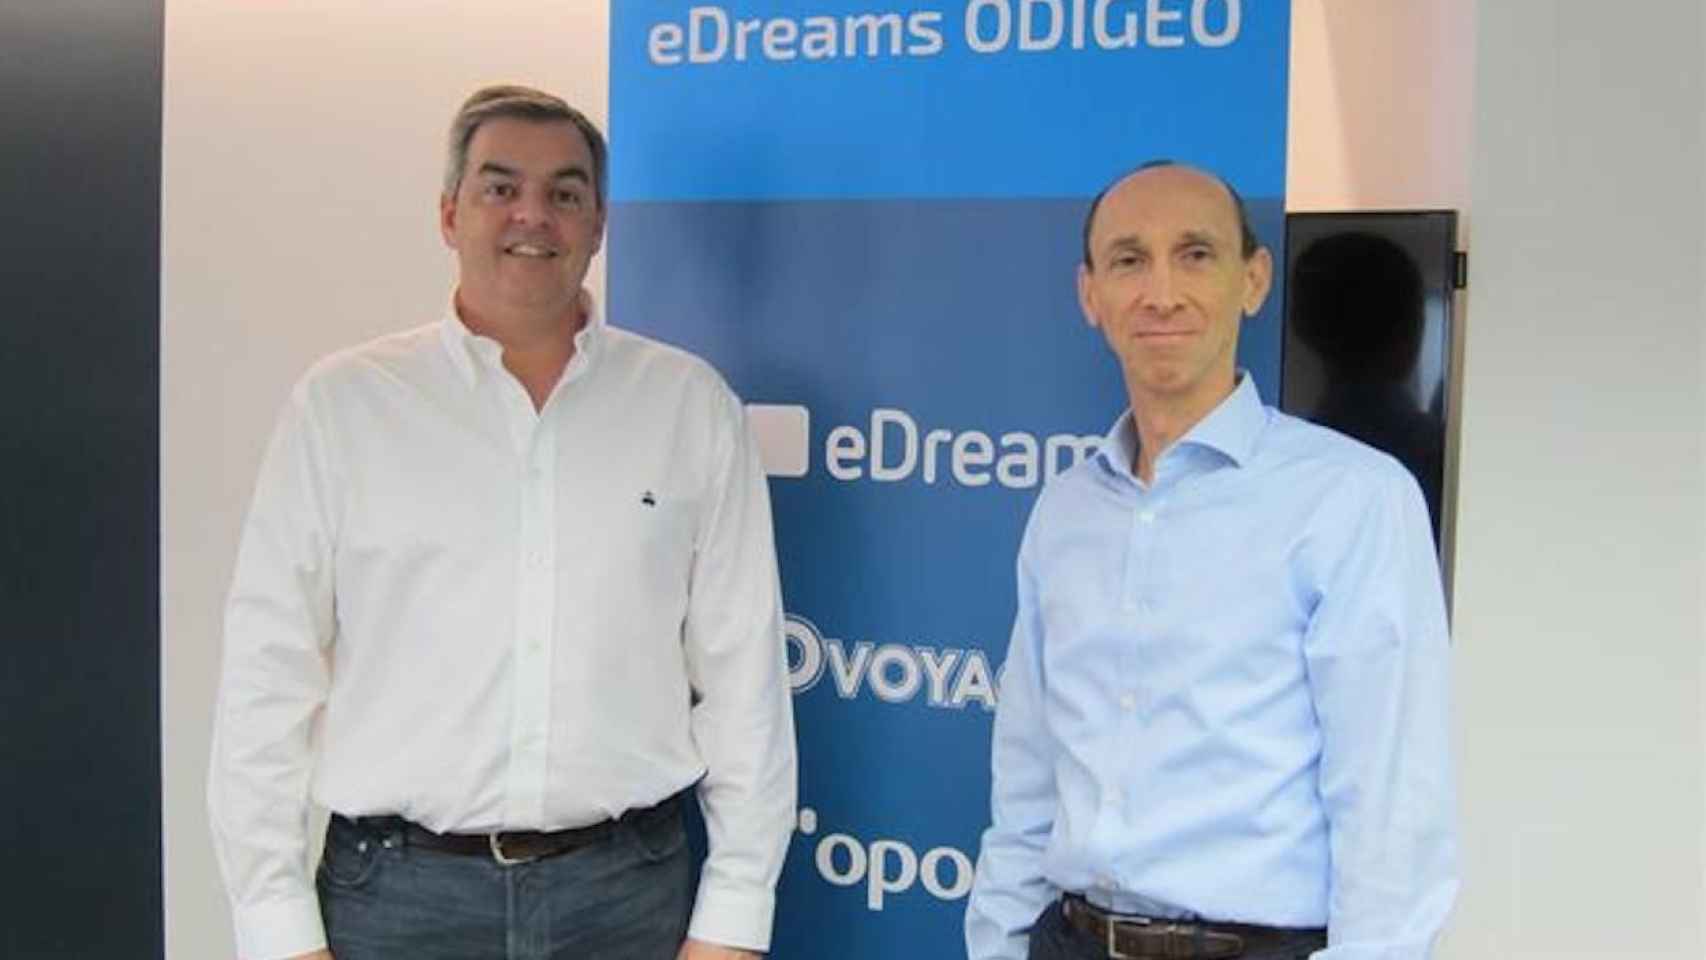 David Elizaga, CFO de eDreams, y Dana Dunne, consejero delegado de eDreams / EP - DAVID ZORRAKINO